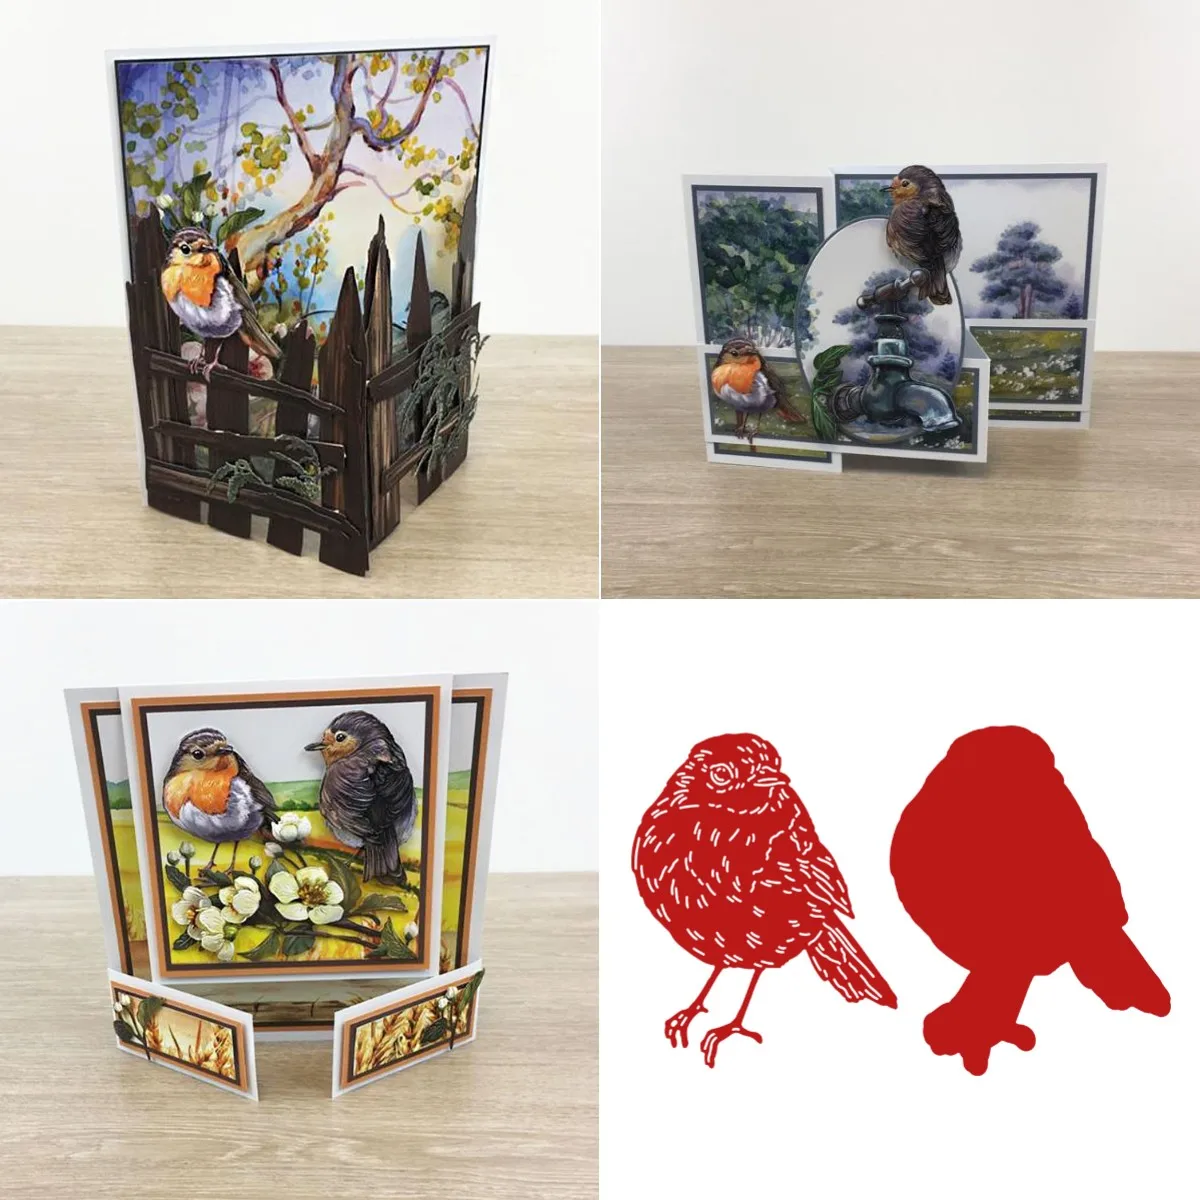 

Pip Bird Animal Die Cutting Dies and Stamps Scrapbook Dariy Decoration Stencil Embossing Template Diy Greeting Card Make Albums